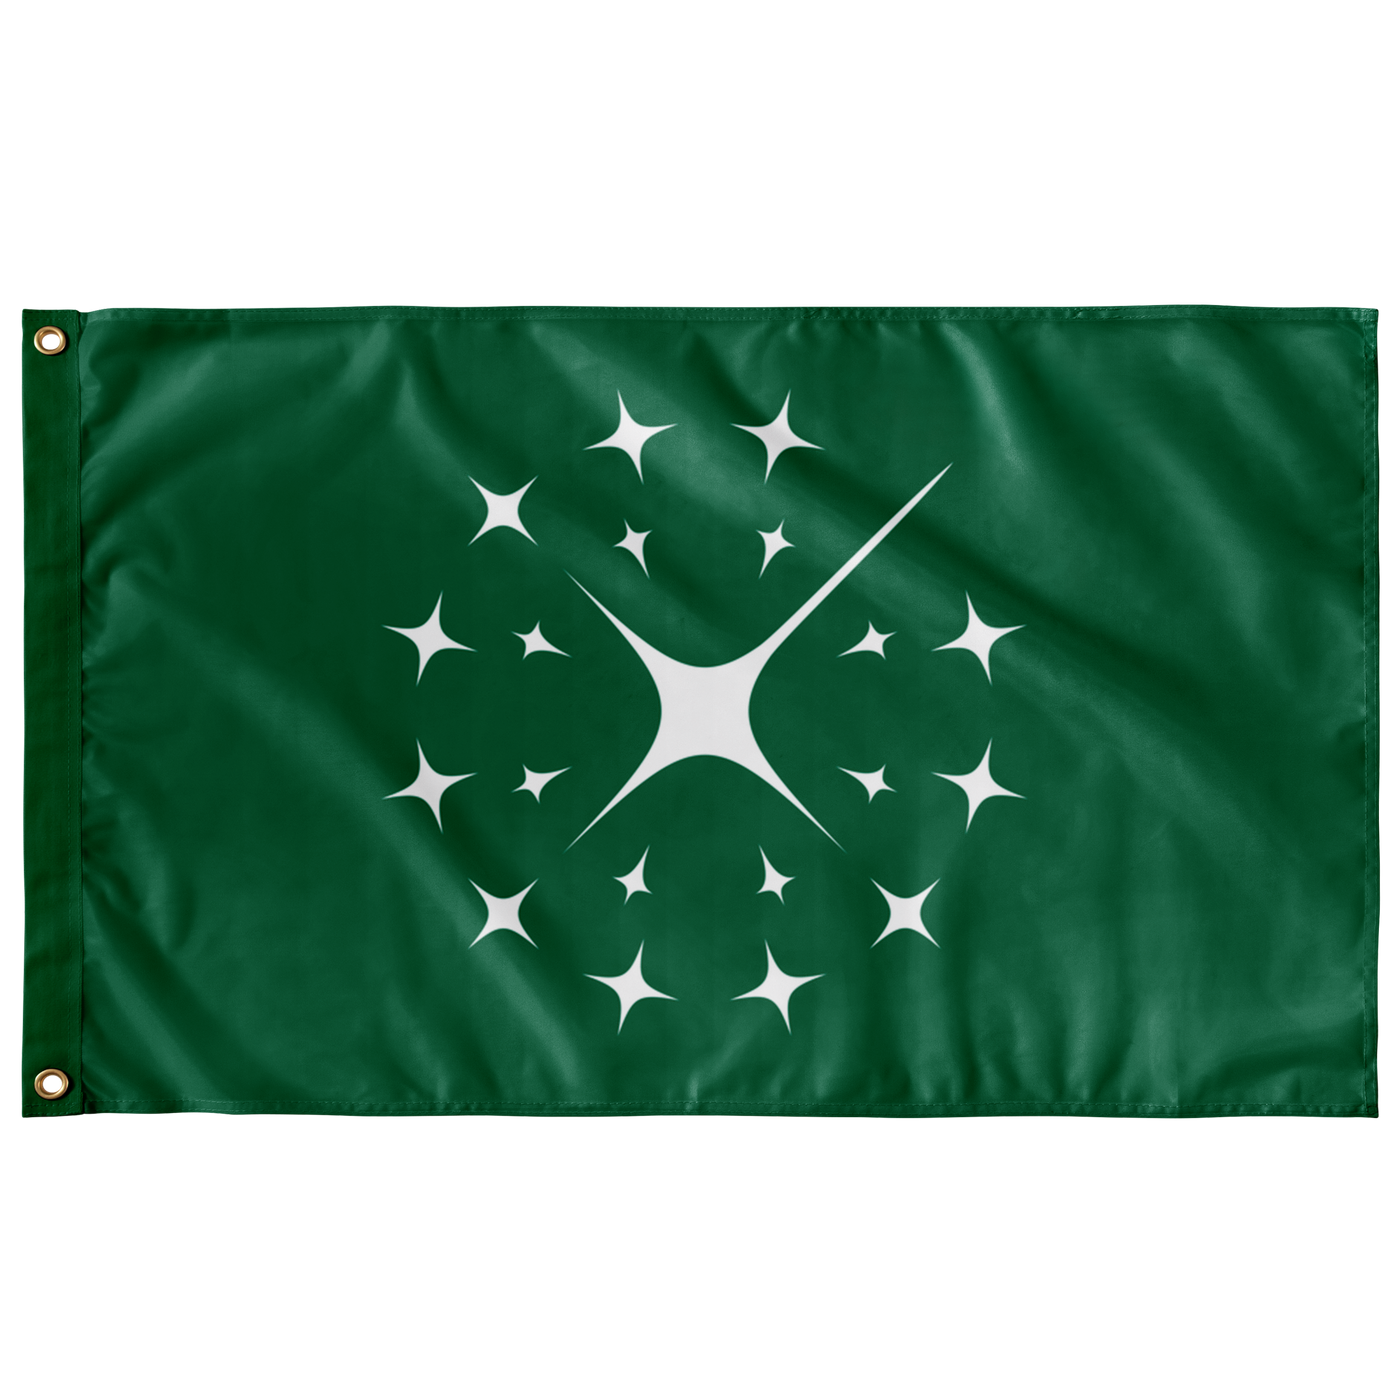 Antares Confederacy Flag